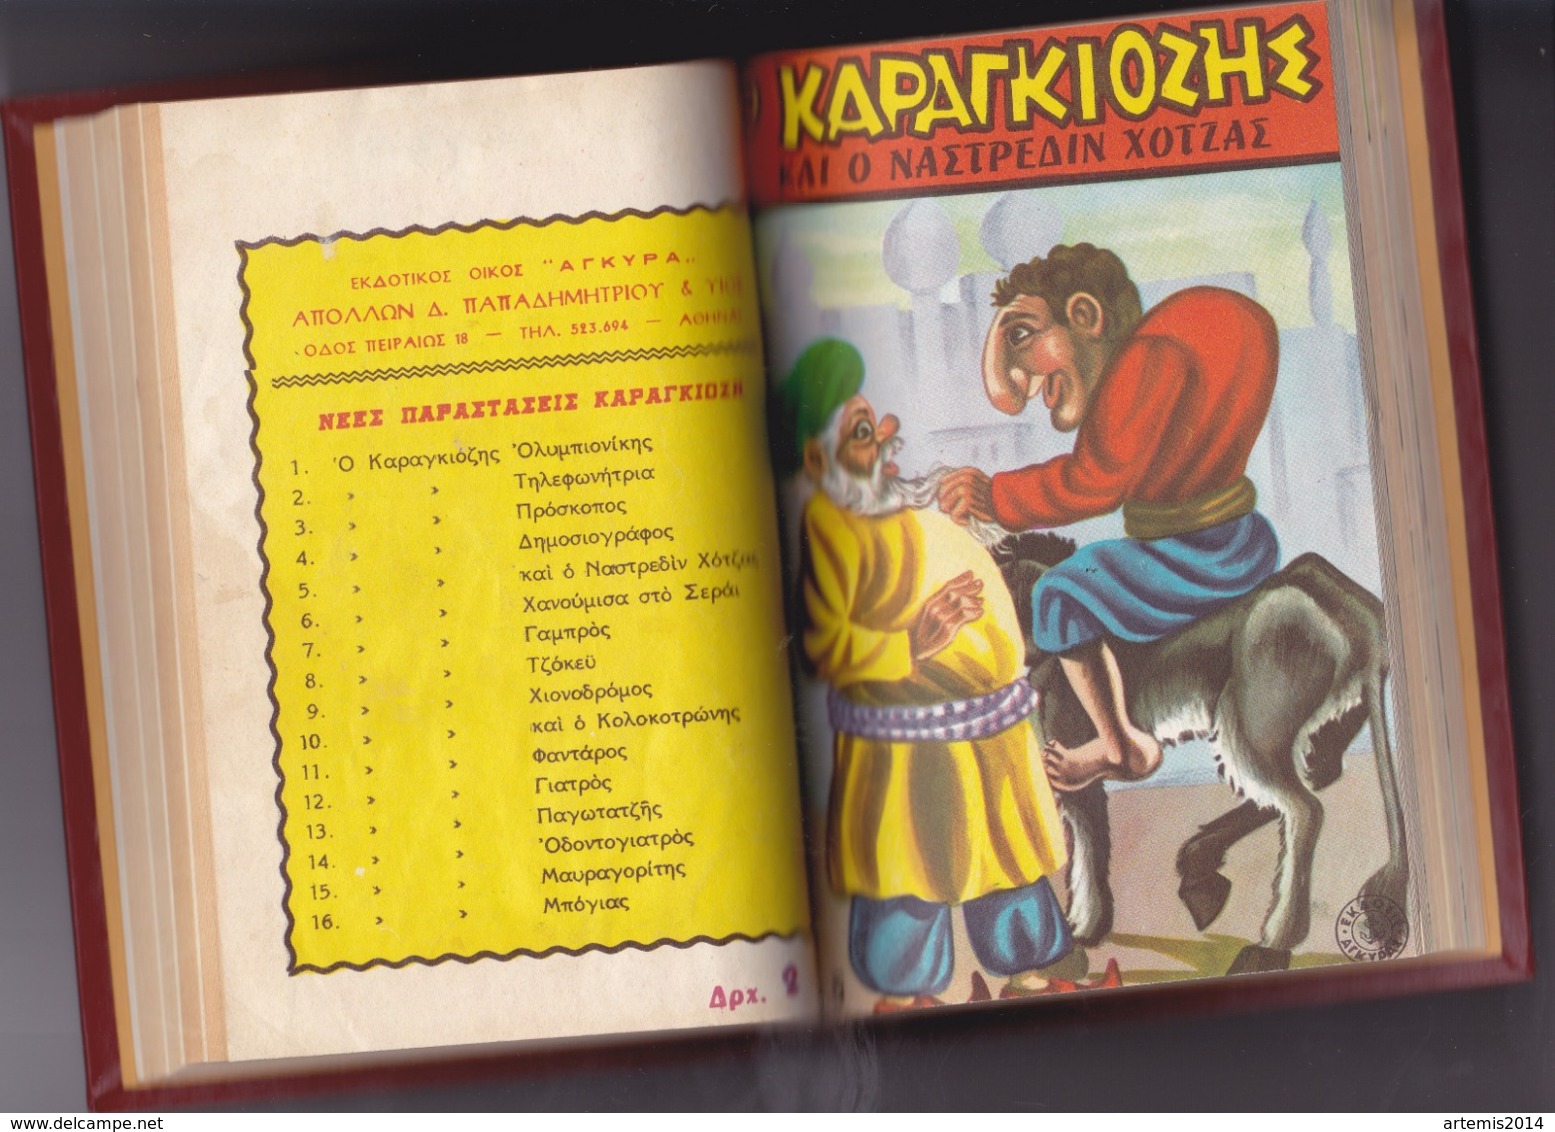 Vintage KARAGIOZIS KARAGOZ GREEK COMIC by AGKIRA 1969 Greece Very COLLECTIBLE 8 issues